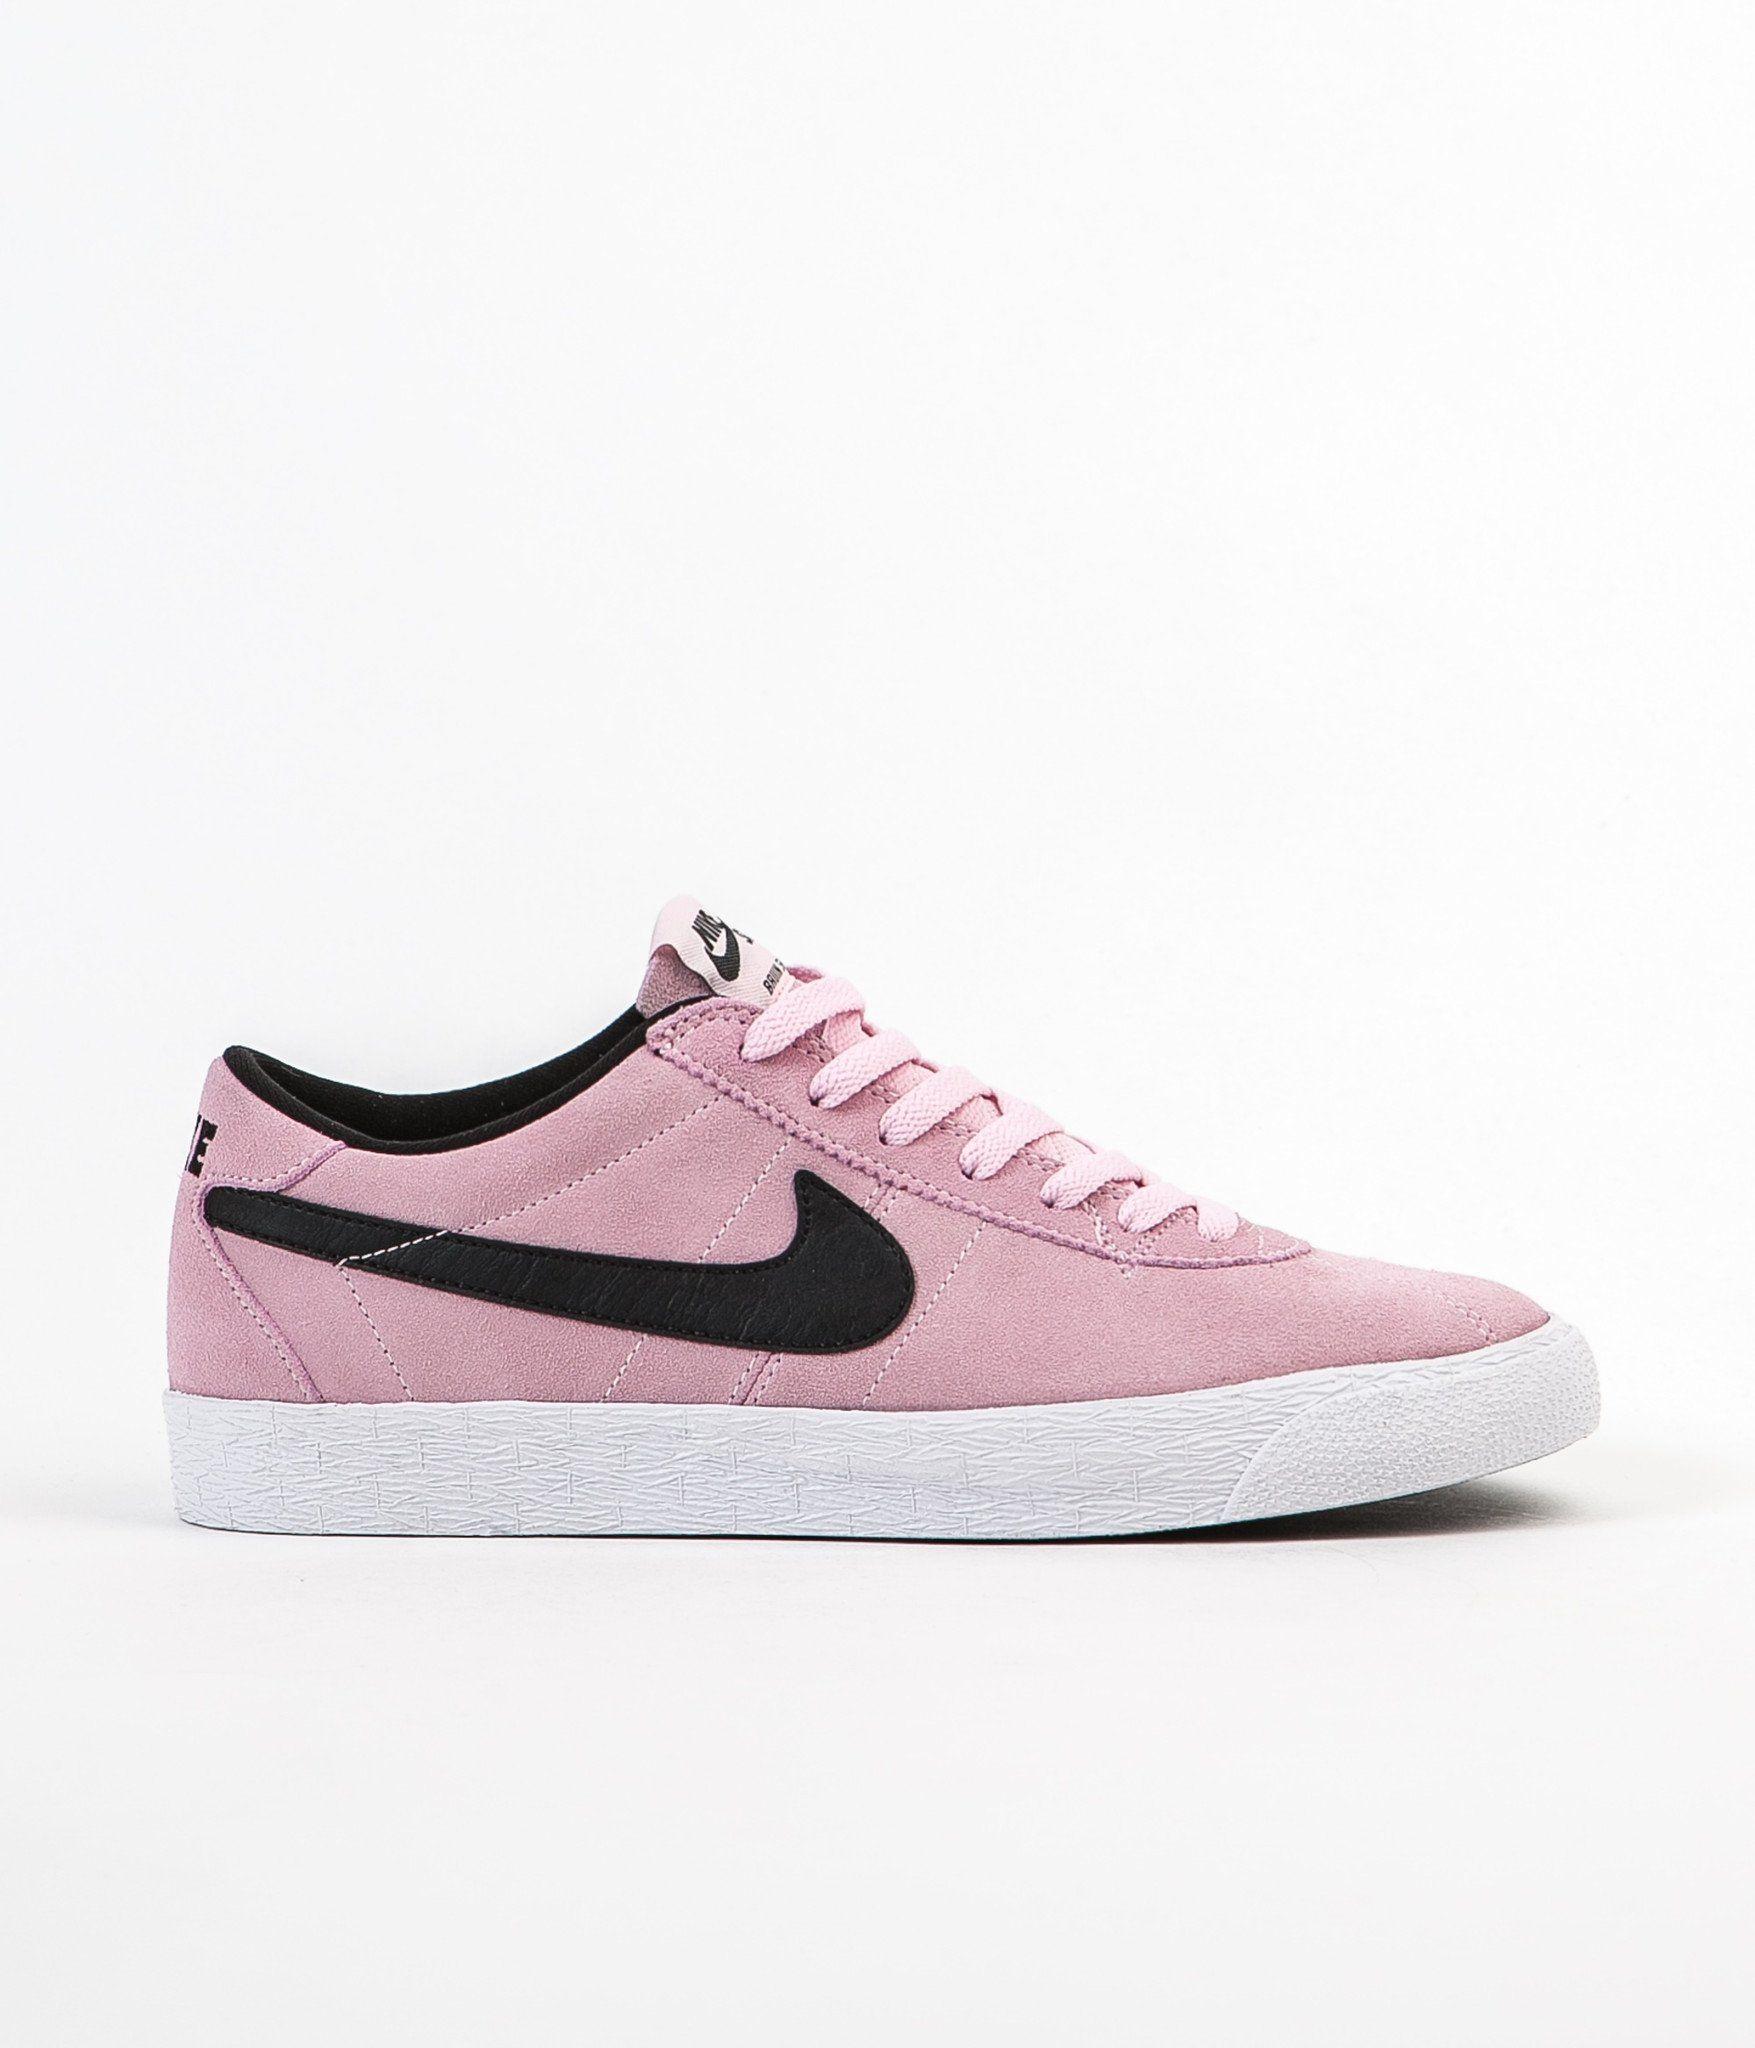 Pink and Black Nike Logo - Nike SB Bruin Premium SE Shoes - Prism Pink / Black - White | Flatspot